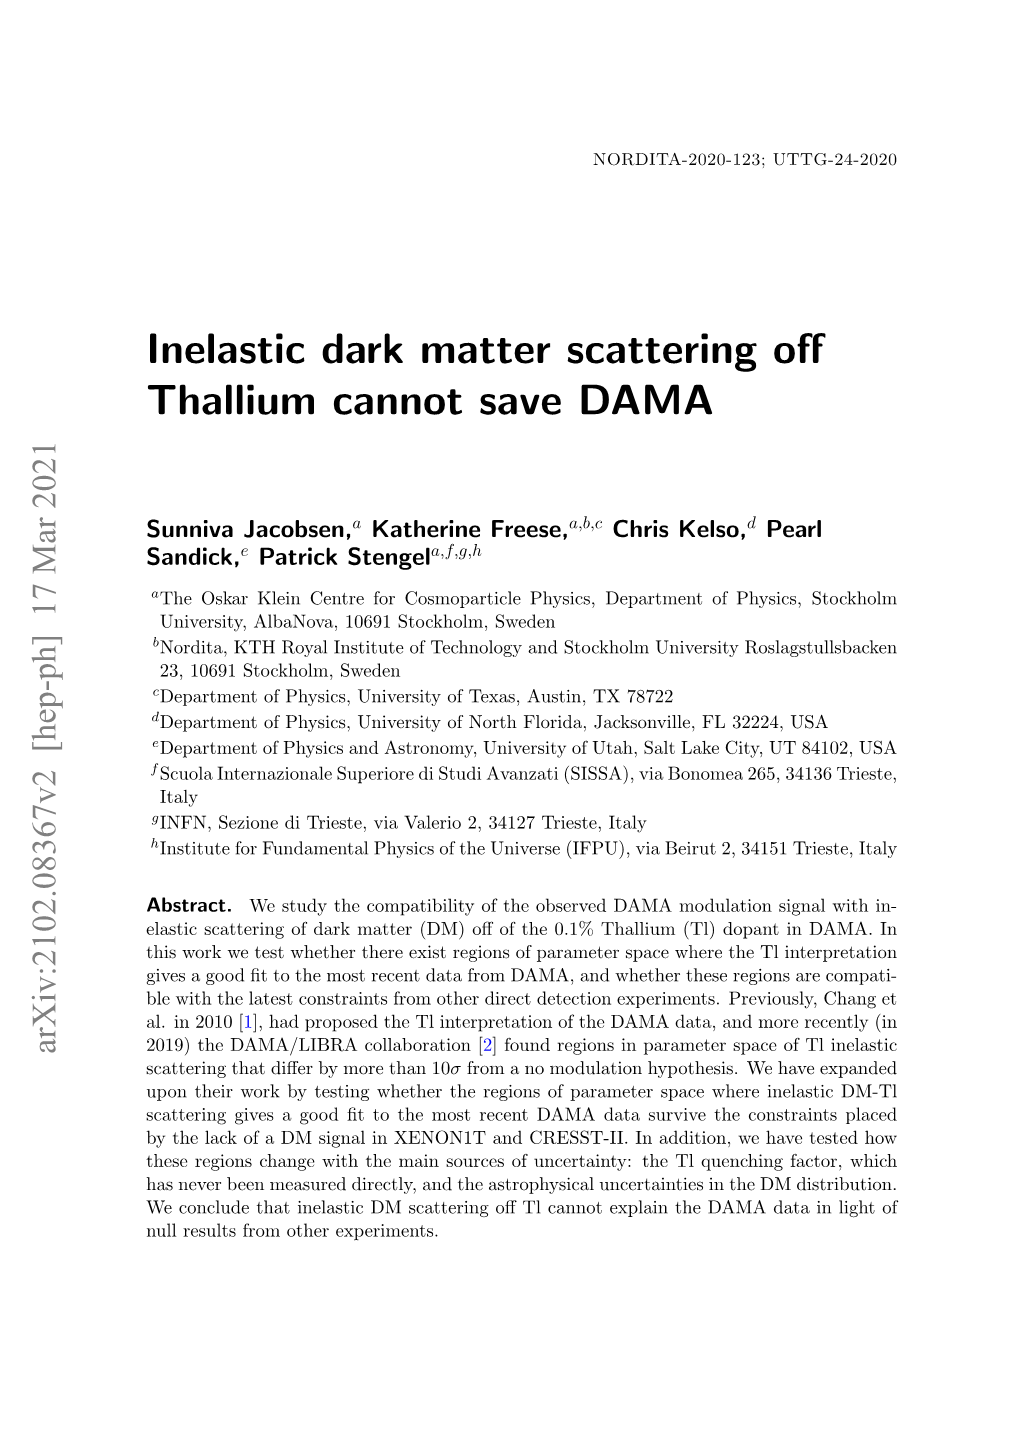 Inelastic Dark Matter Scattering Off Thallium Cannot Save DAMA